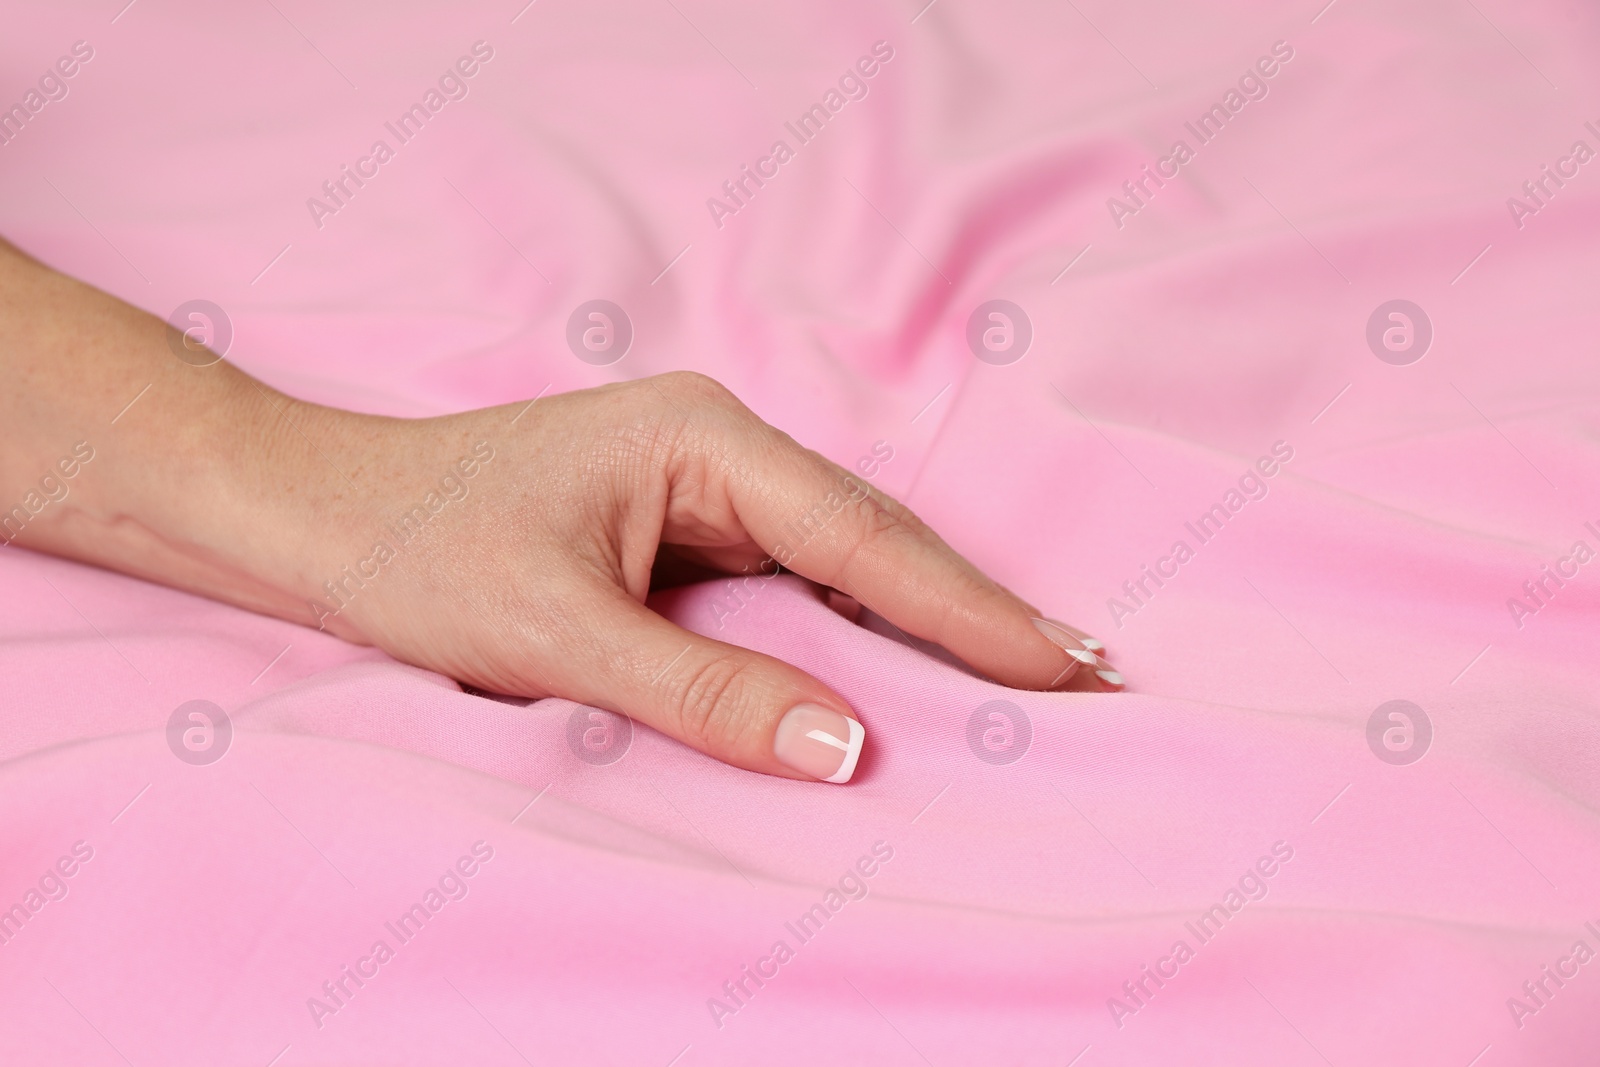 Photo of Woman touching delicate pink fabric, closeup view